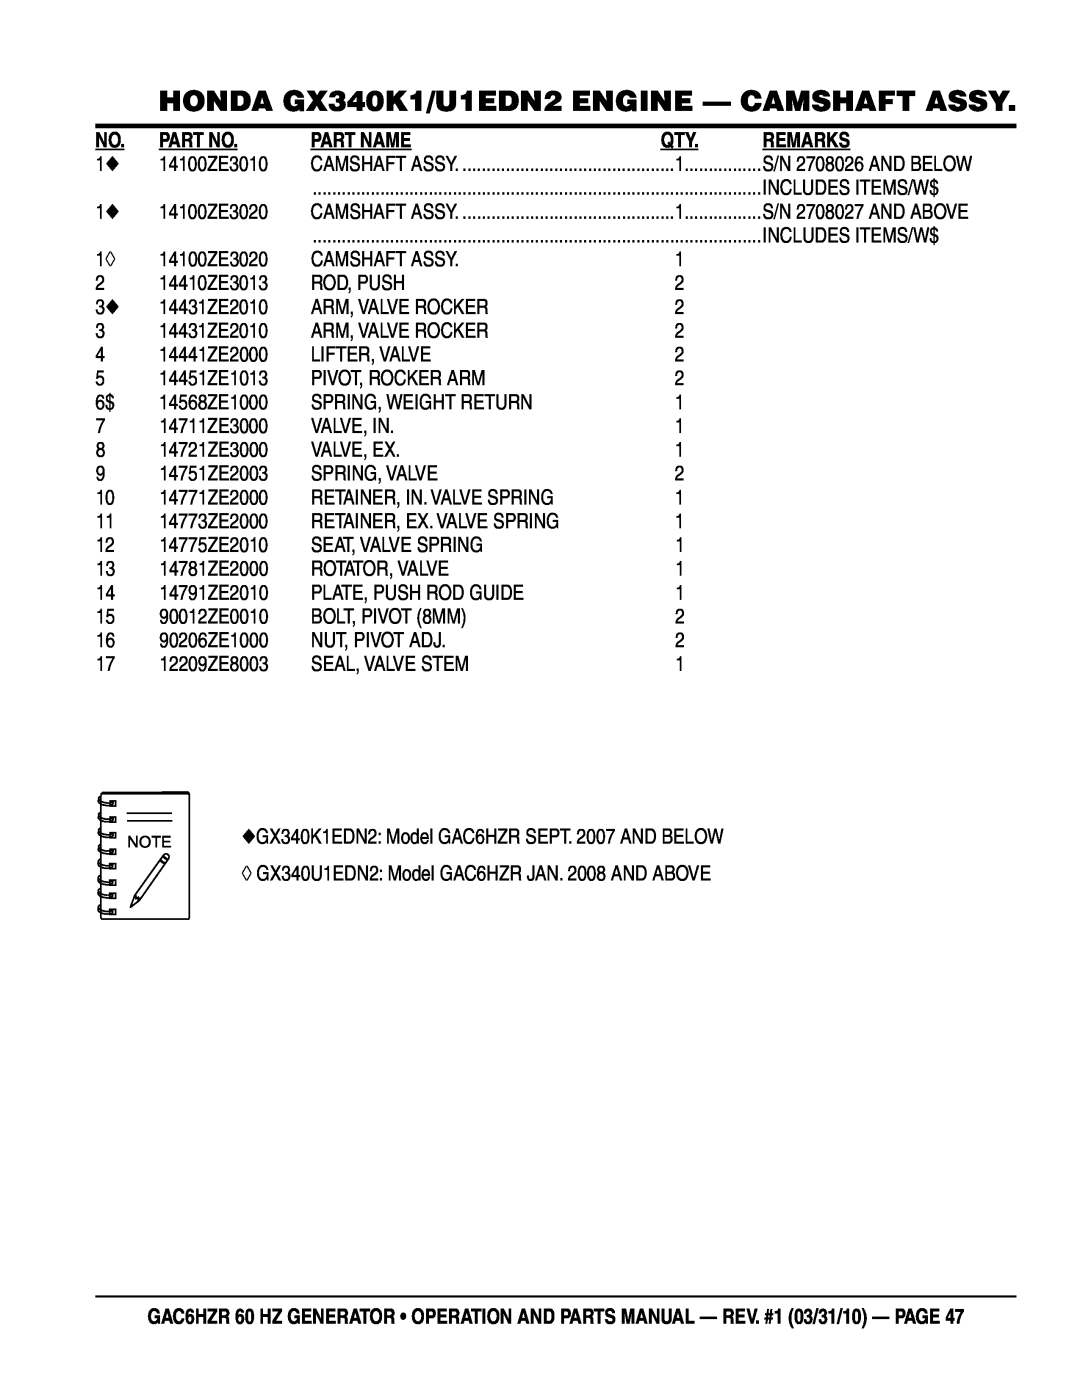 Multiquip GAC-6HZR manual HONDA GX340K1/U1EDN2 ENGINE - CAMSHAFT ASSY, Part Name, Remarks 